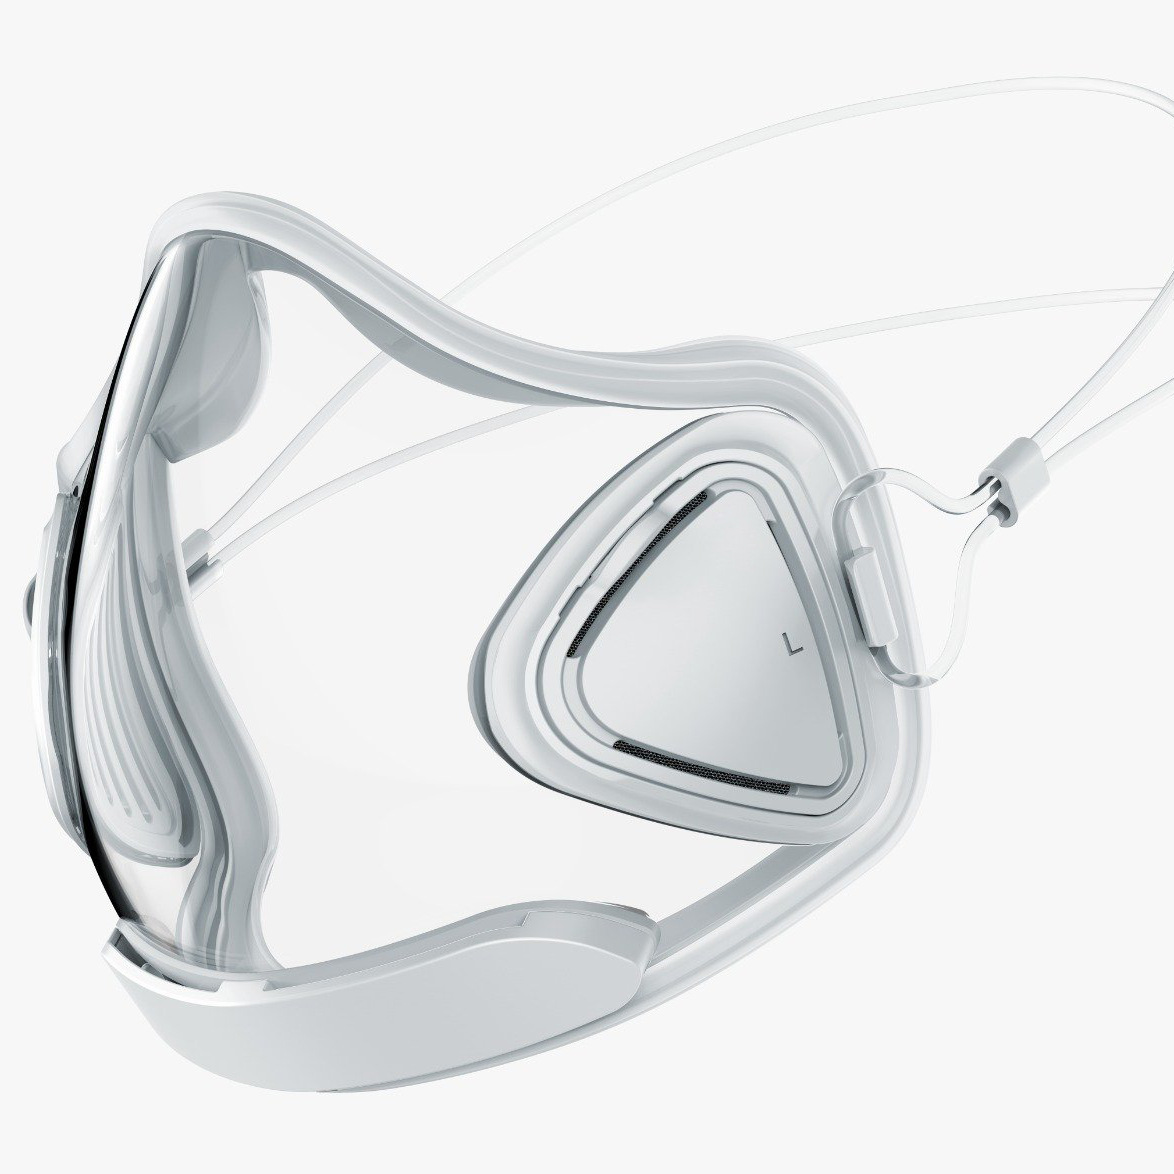 Transparent PC protective mask anti splash protective mask can filter face shield HD anti fog

